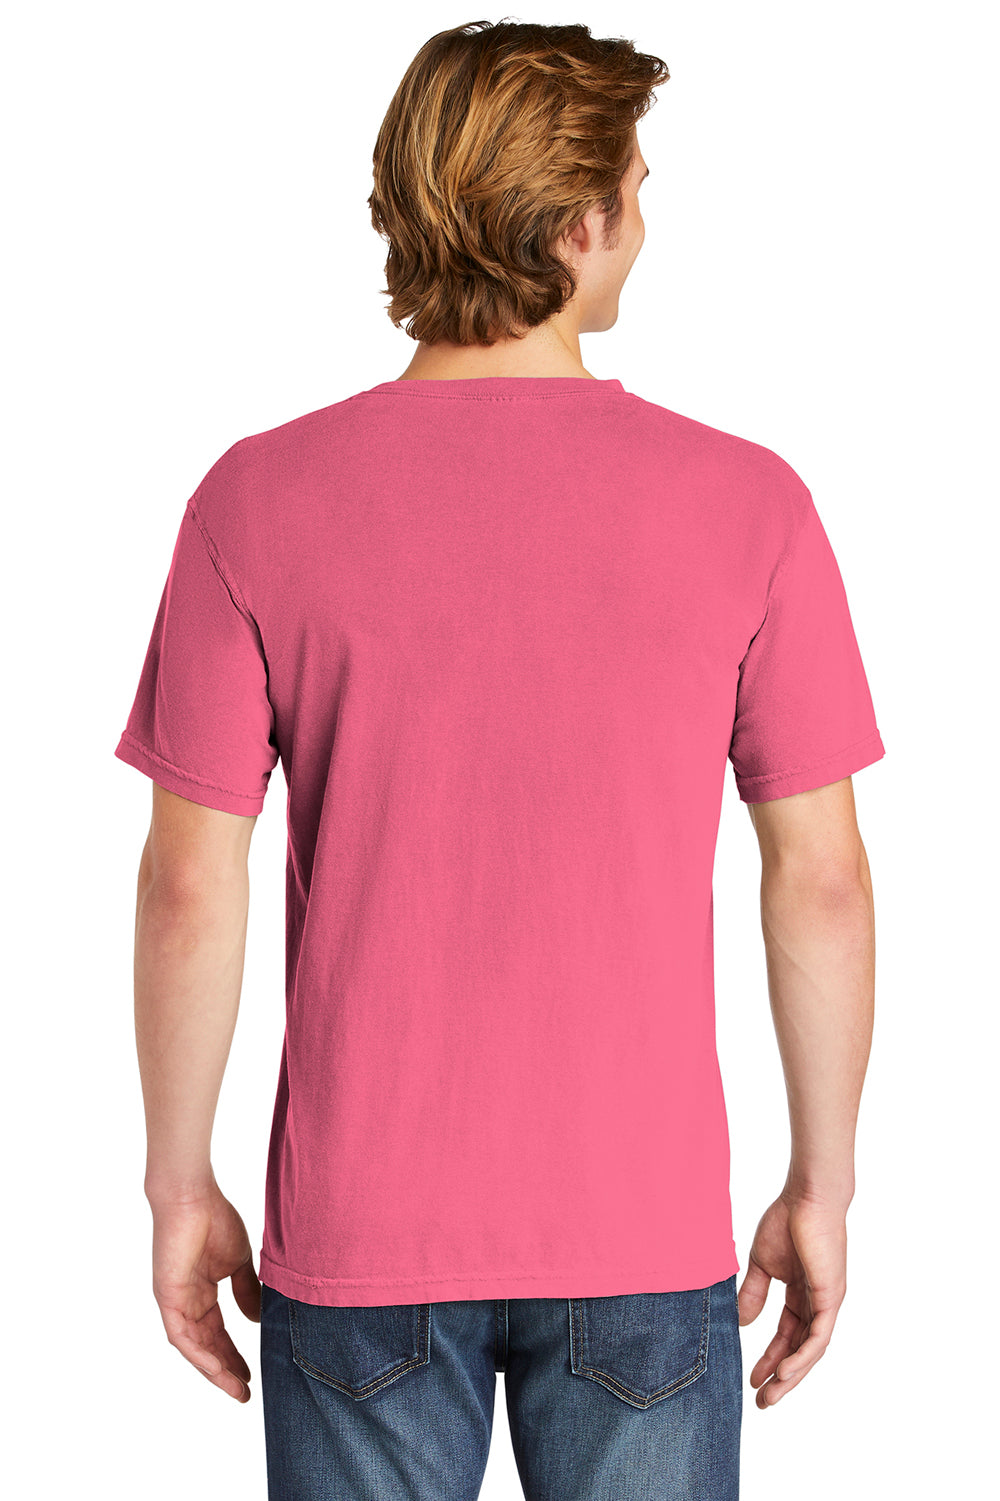 Comfort Colors 1717/C1717 Mens Short Sleeve Crewneck T-Shirt Crunchberry Pink Back